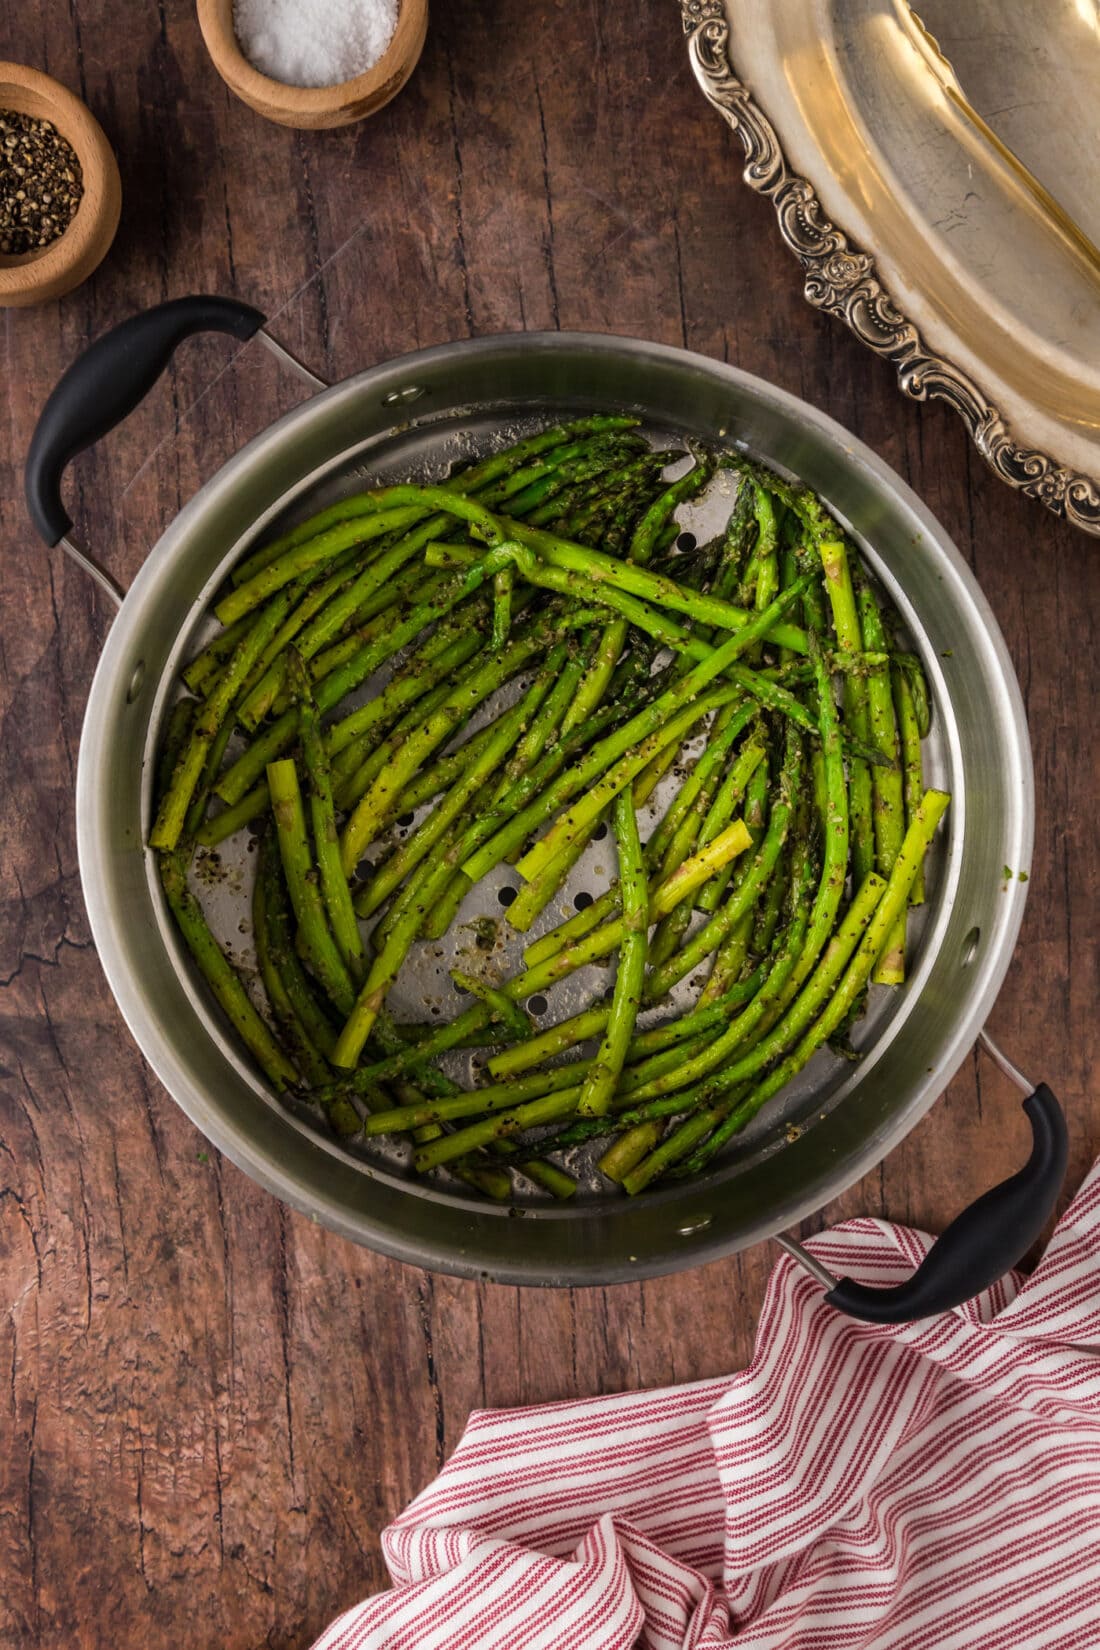 Steamed Asparagus in a steamer basket